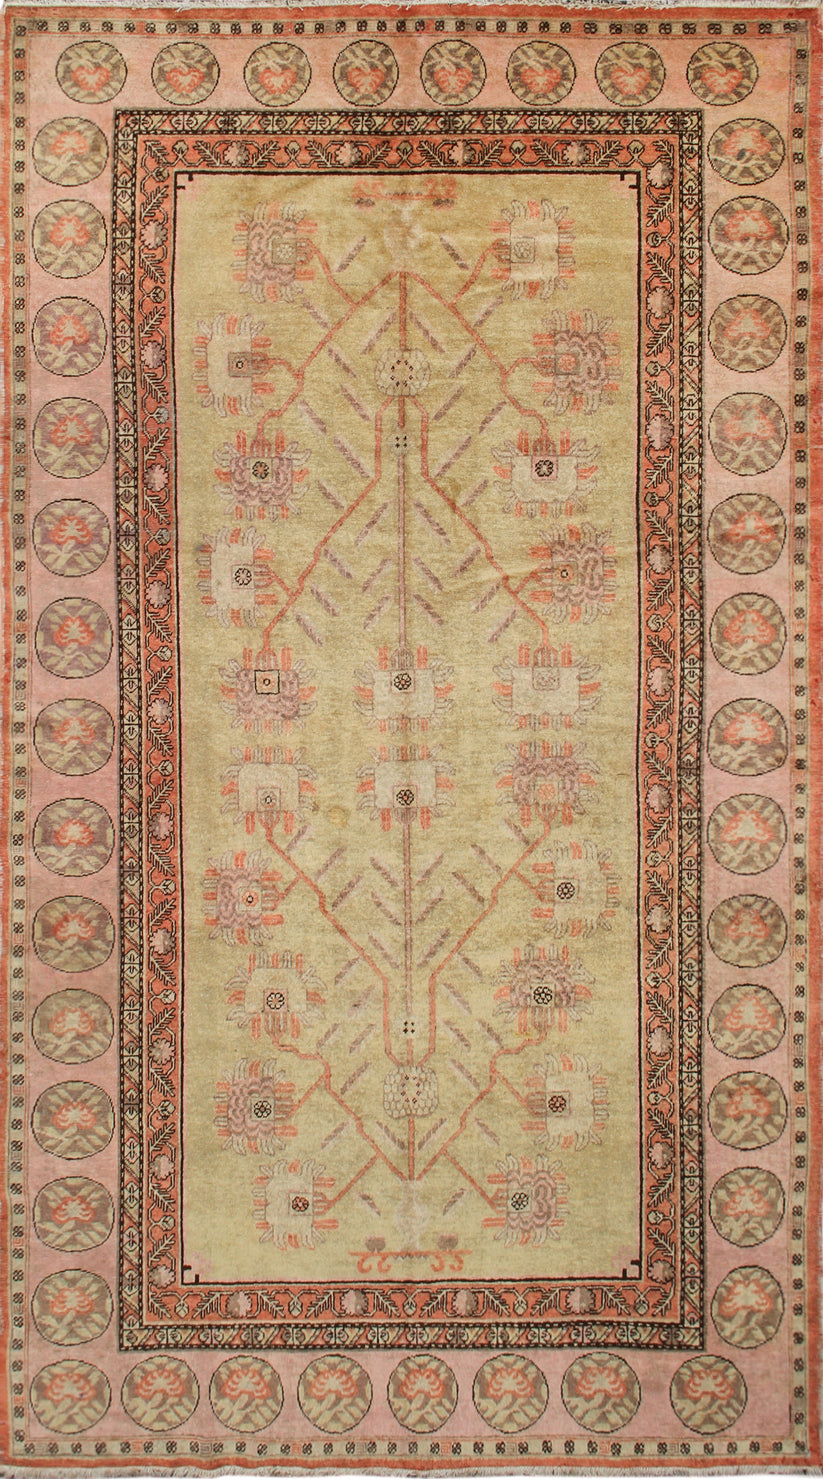 12.04 x 6.01 Antique Samarkand